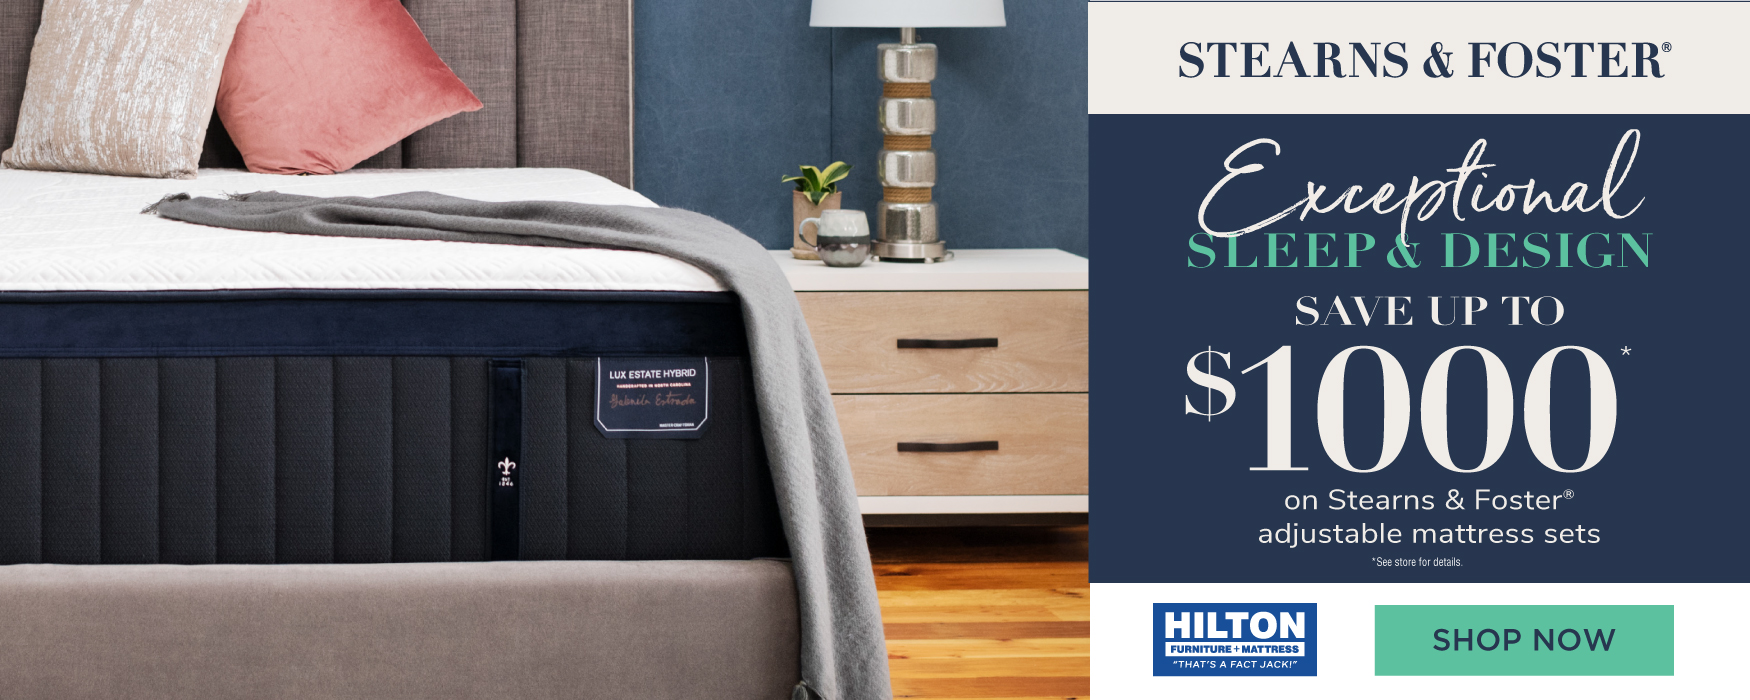 hilton furniture and mattress logo